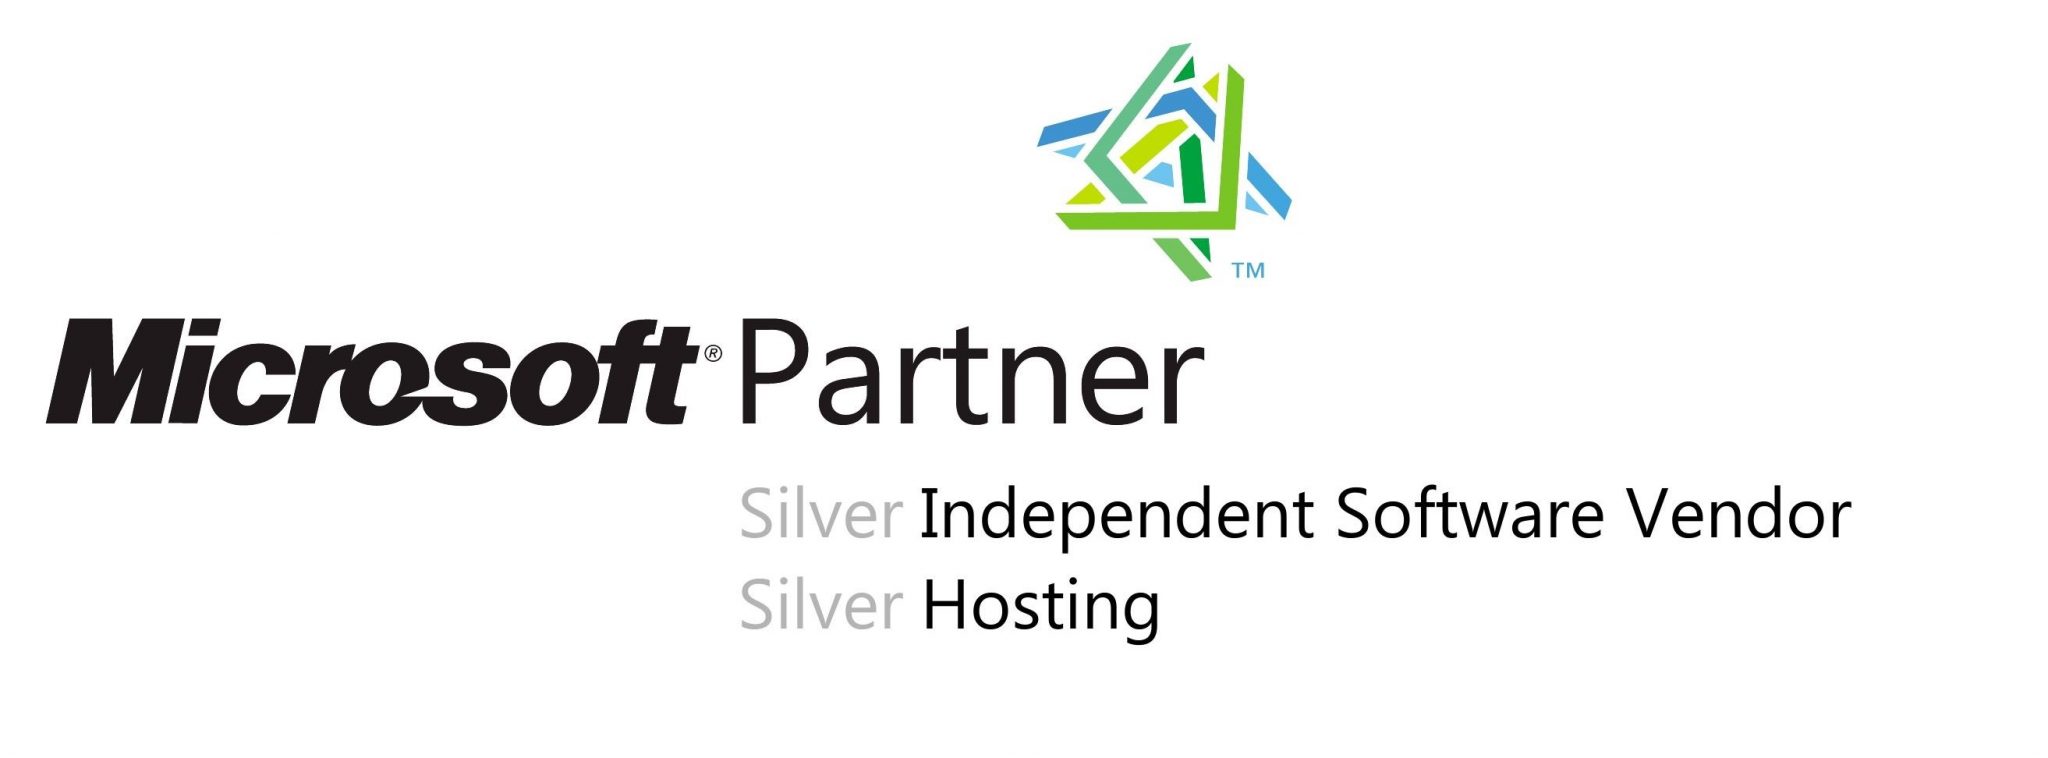 Microsoft Partner, Logo